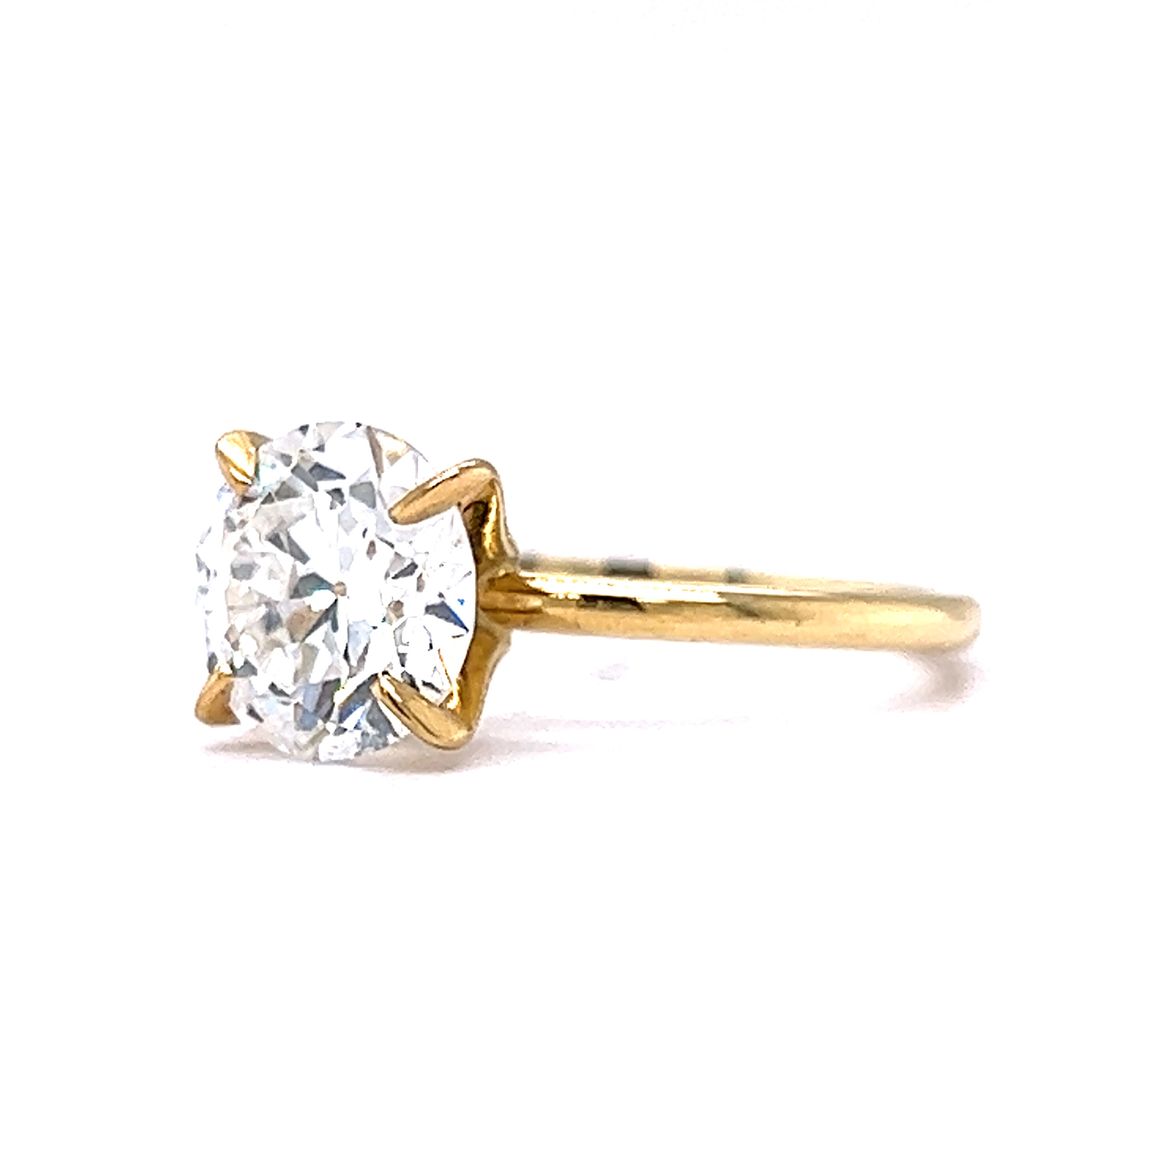 2.08 Old European Cut Diamond Engagement Ring in 14k Yellow Gold